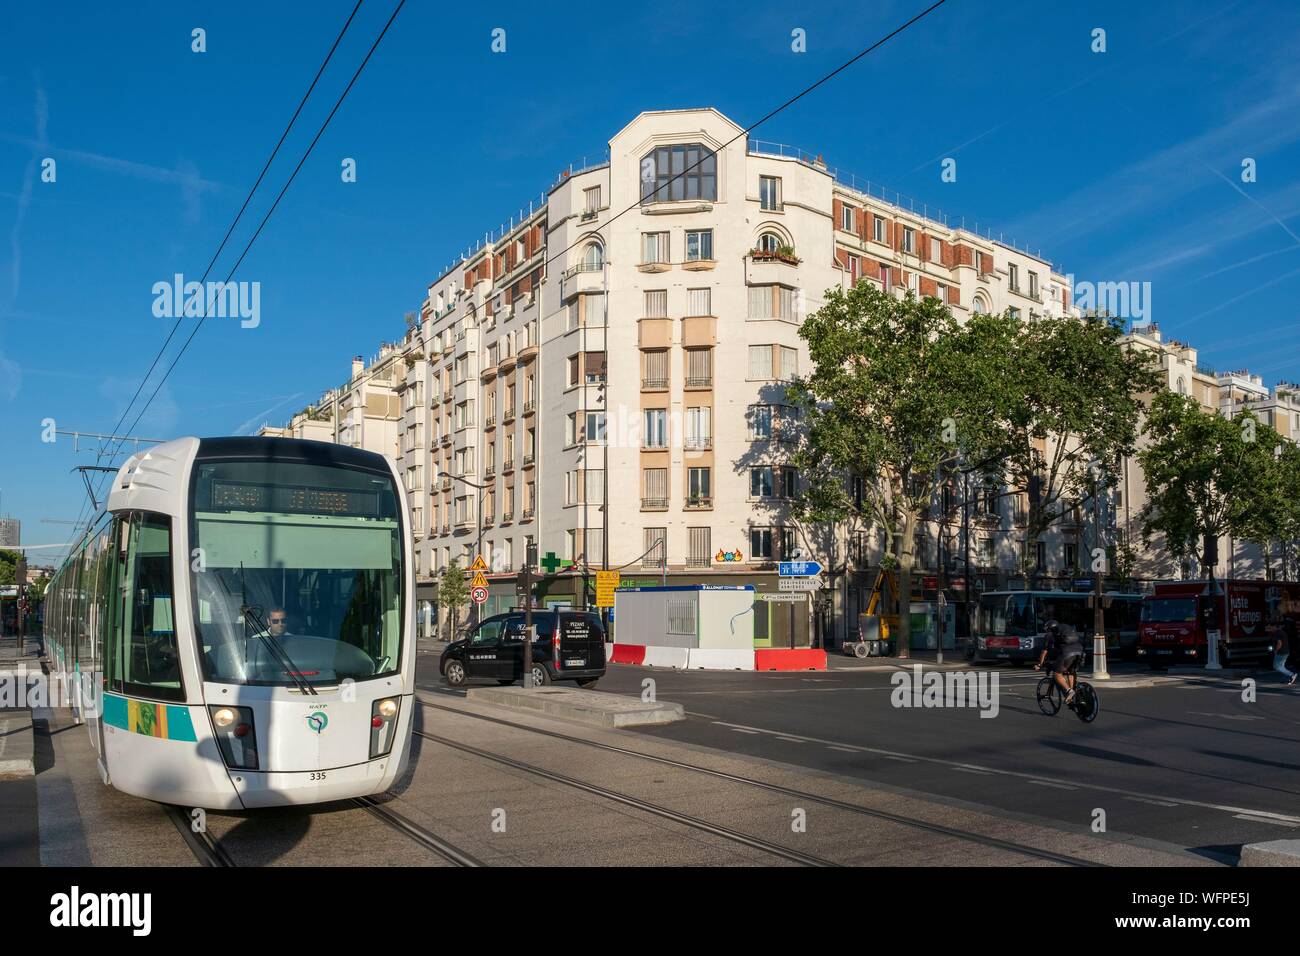 France, Paris, Porte d'Asnieres, Berthier bld, T3 tramway station Stock  Photo - Alamy